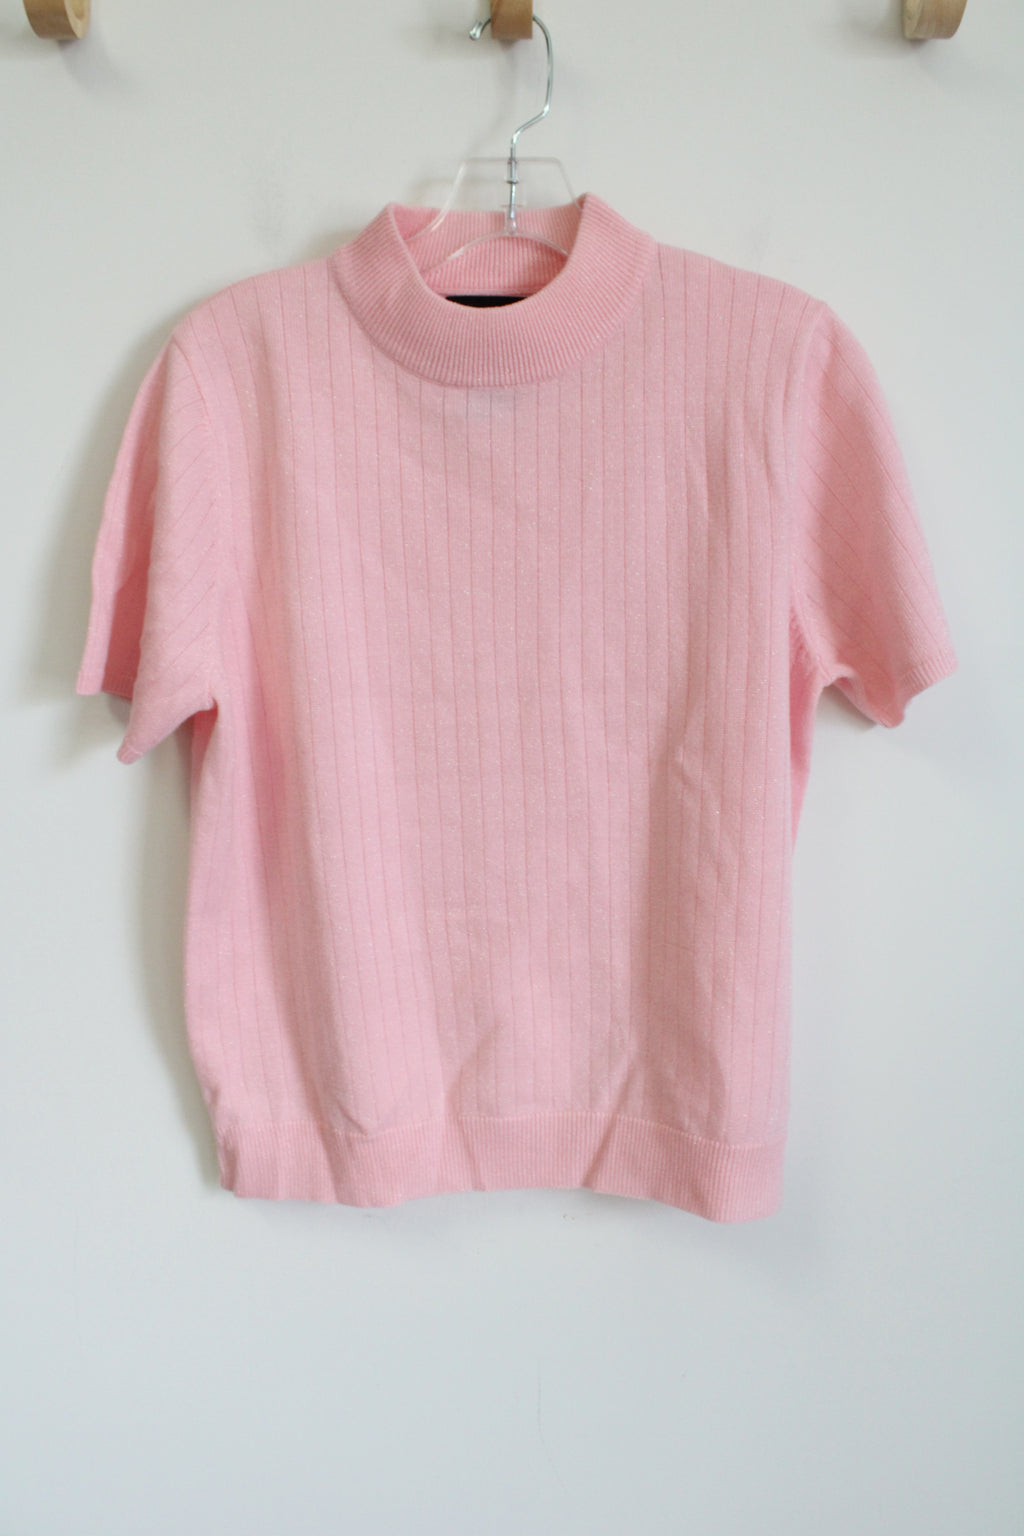 Sag Harbor Shiny Pink Mock Neck Sweater Top | S